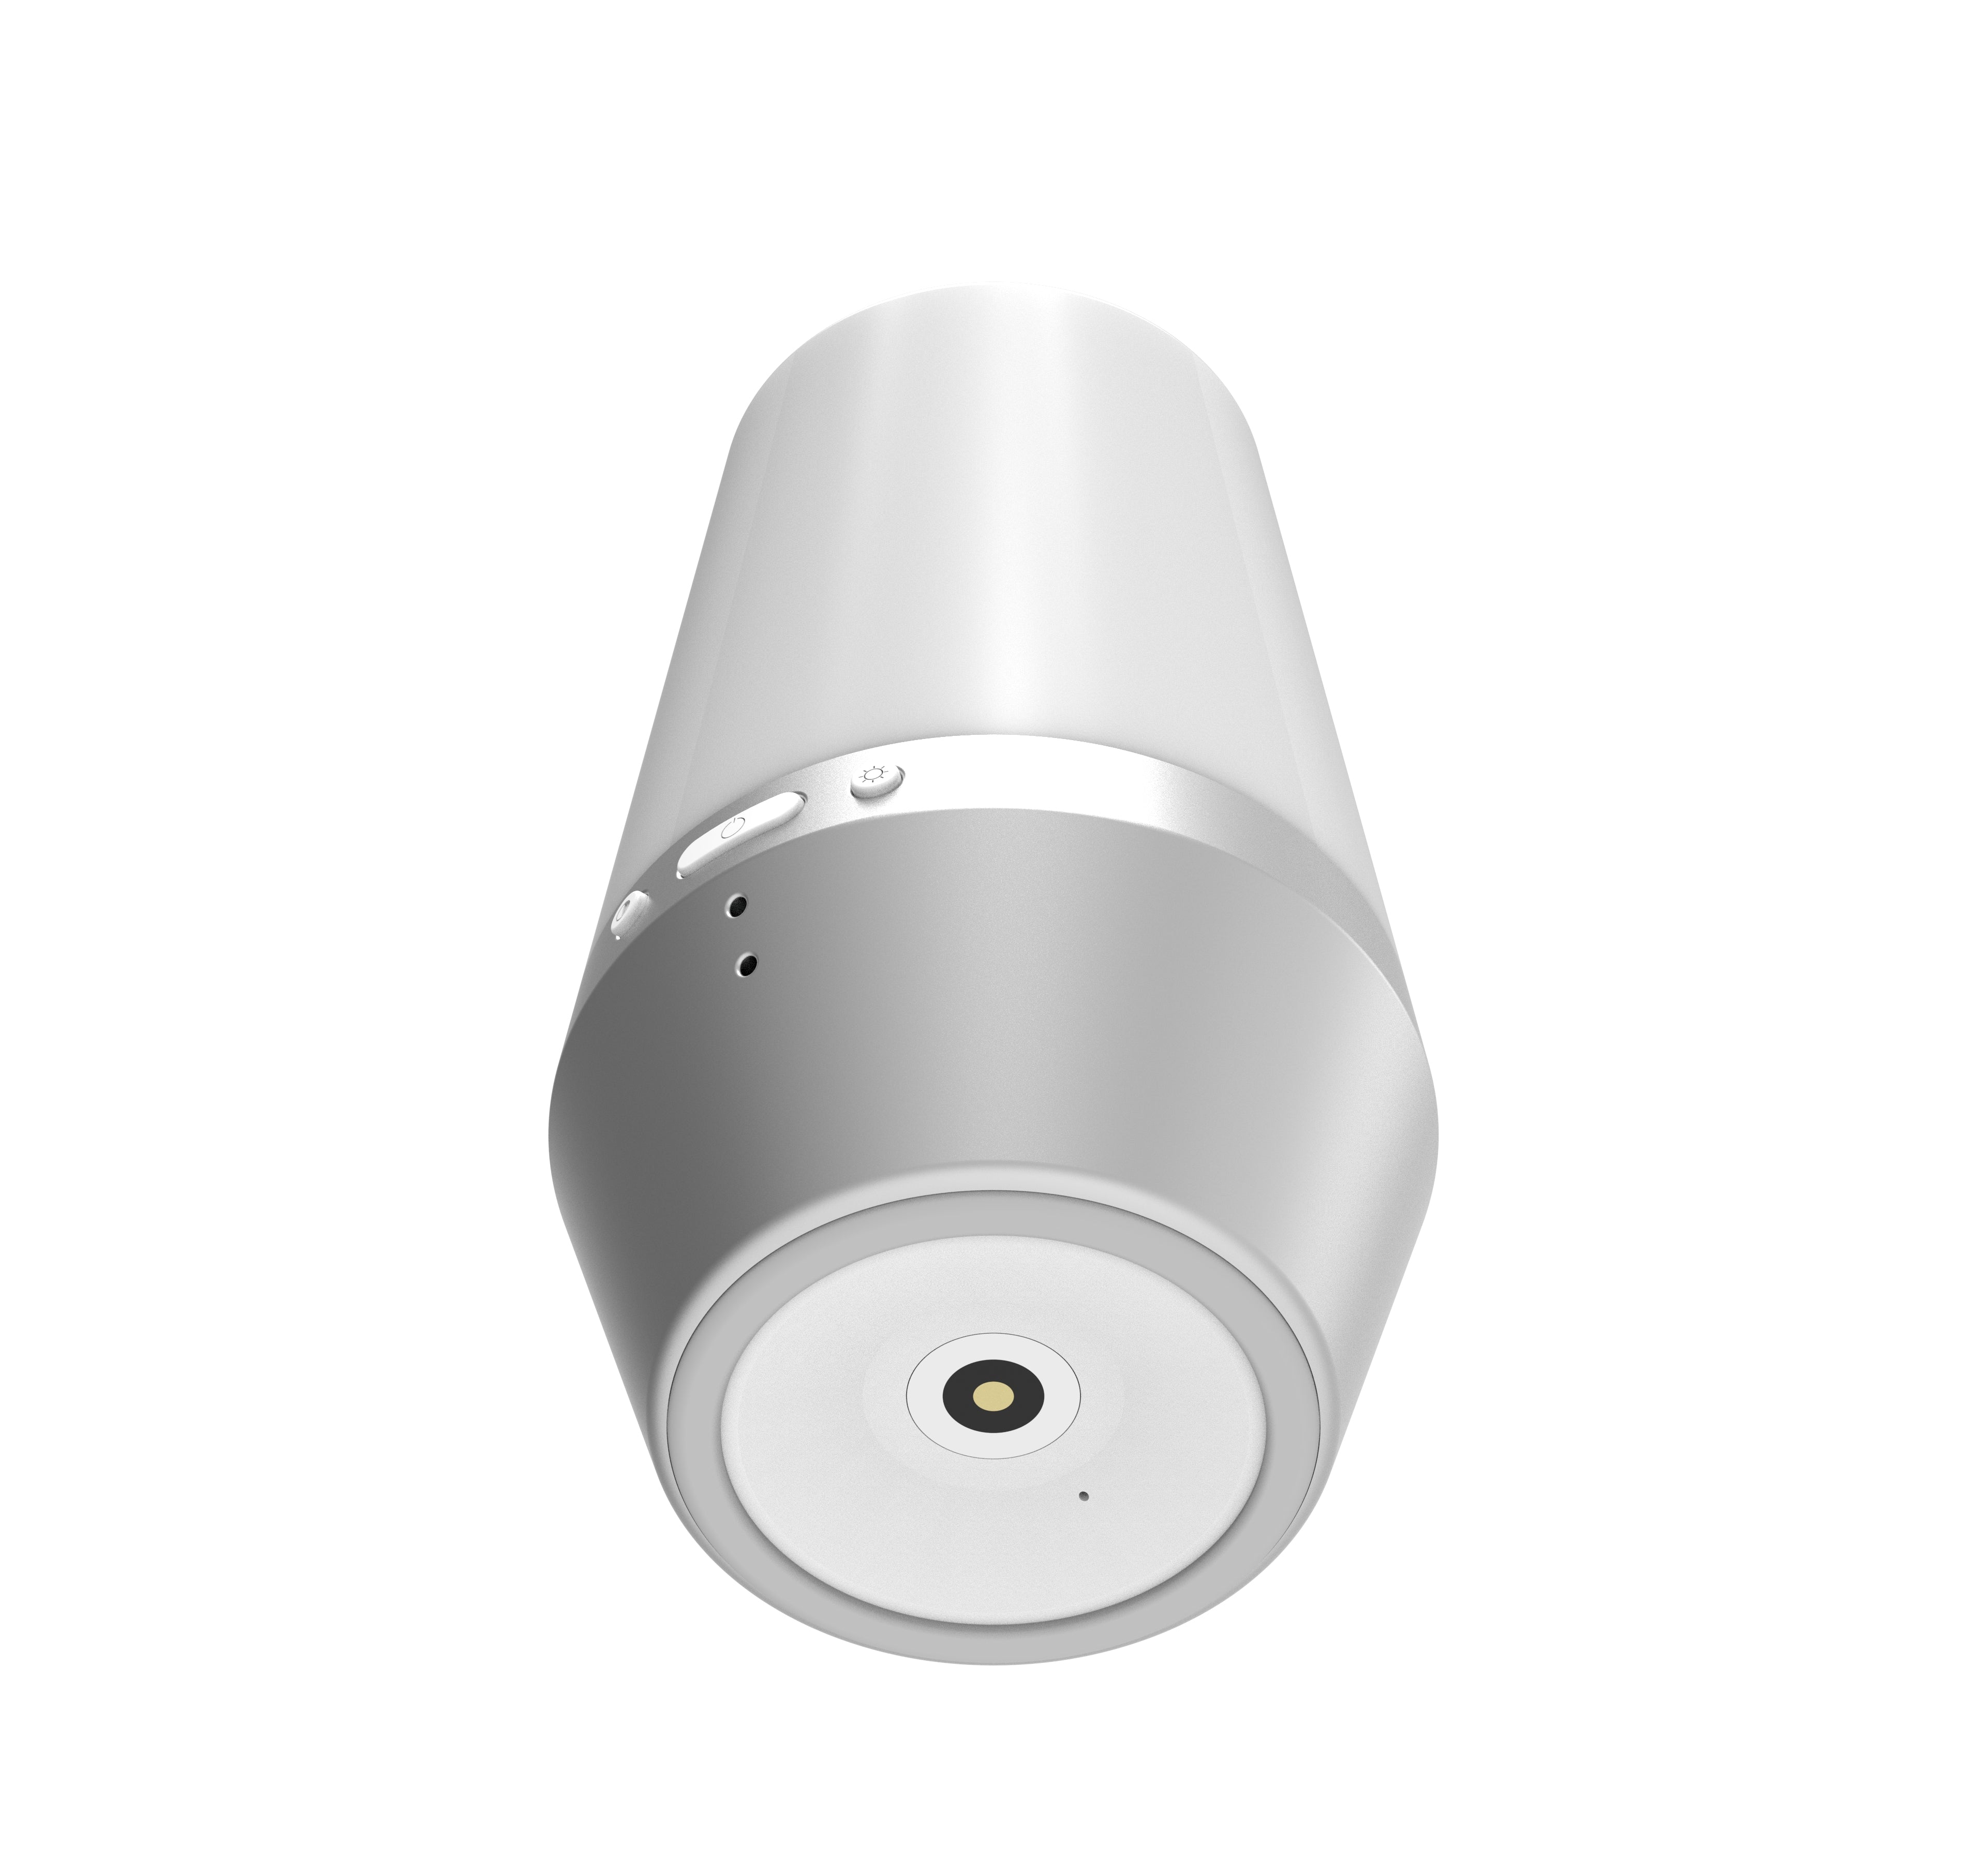 Laysun magnetic adsorption charging adjustable color temperature aluminum alloy night light bedside lamp - LaySun Smart